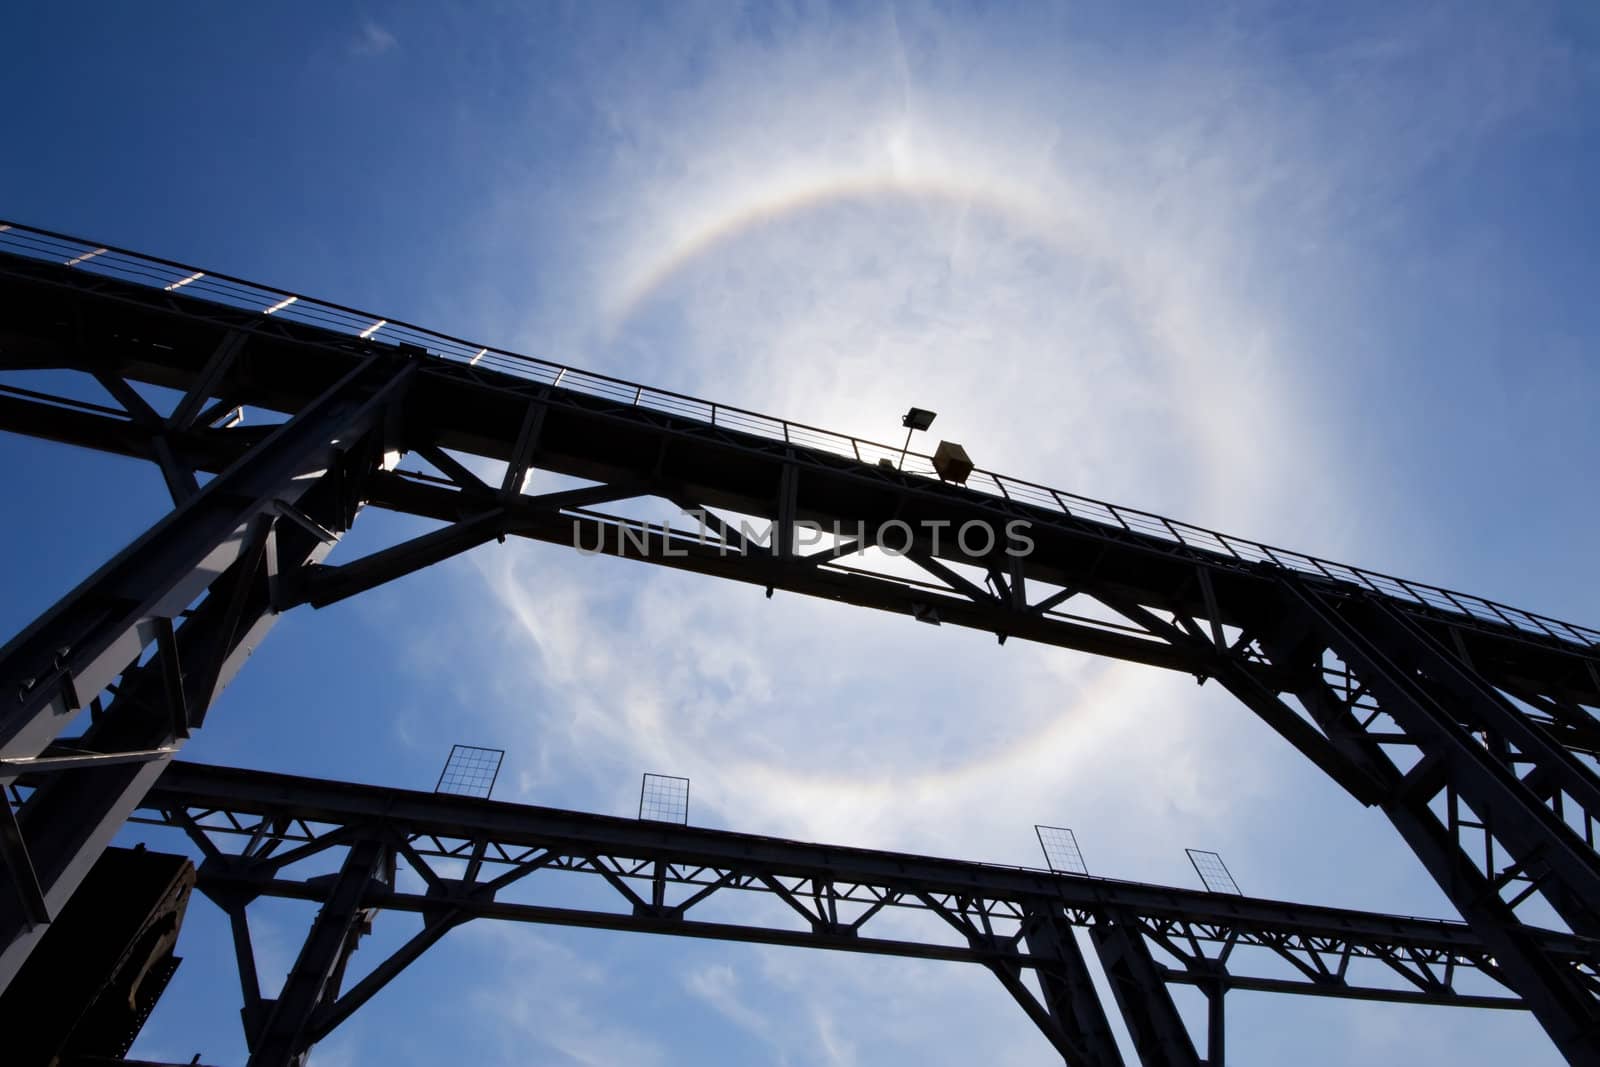 An amazing sun halo in blue cloudy sky above metal bridge